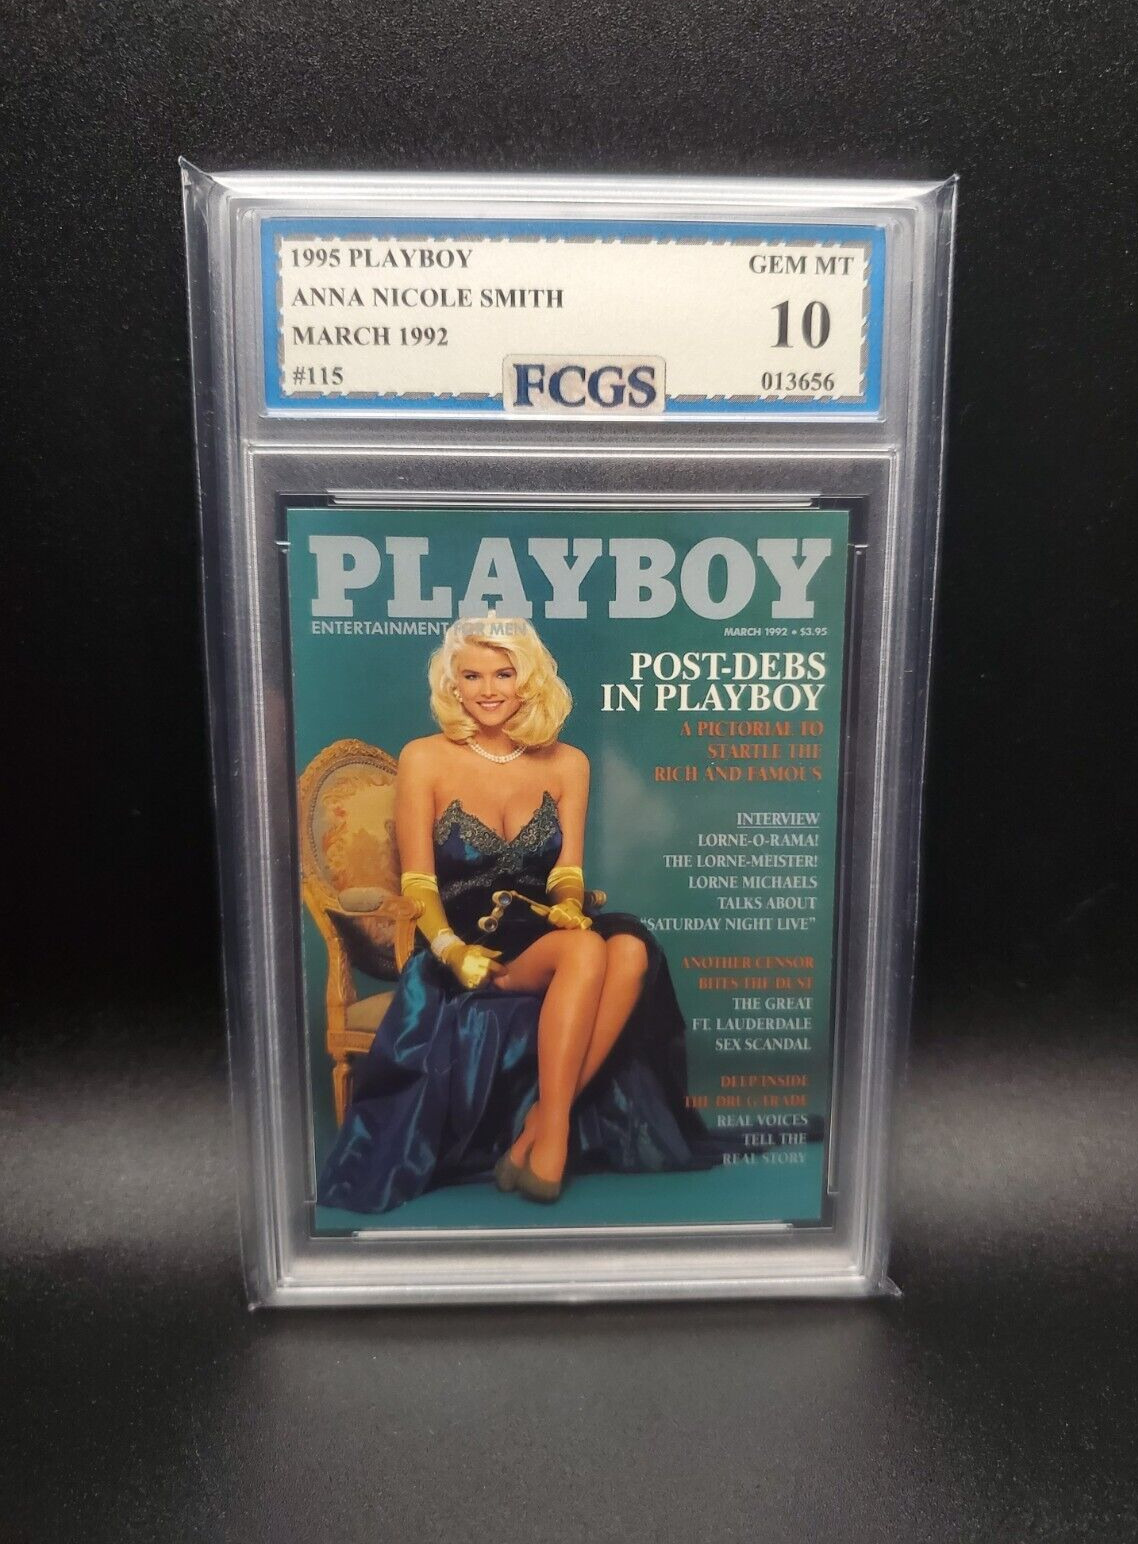 Anna Nicole Smith #115 (1995) Playboy - Graded 10 [FCGS] GEM-MT